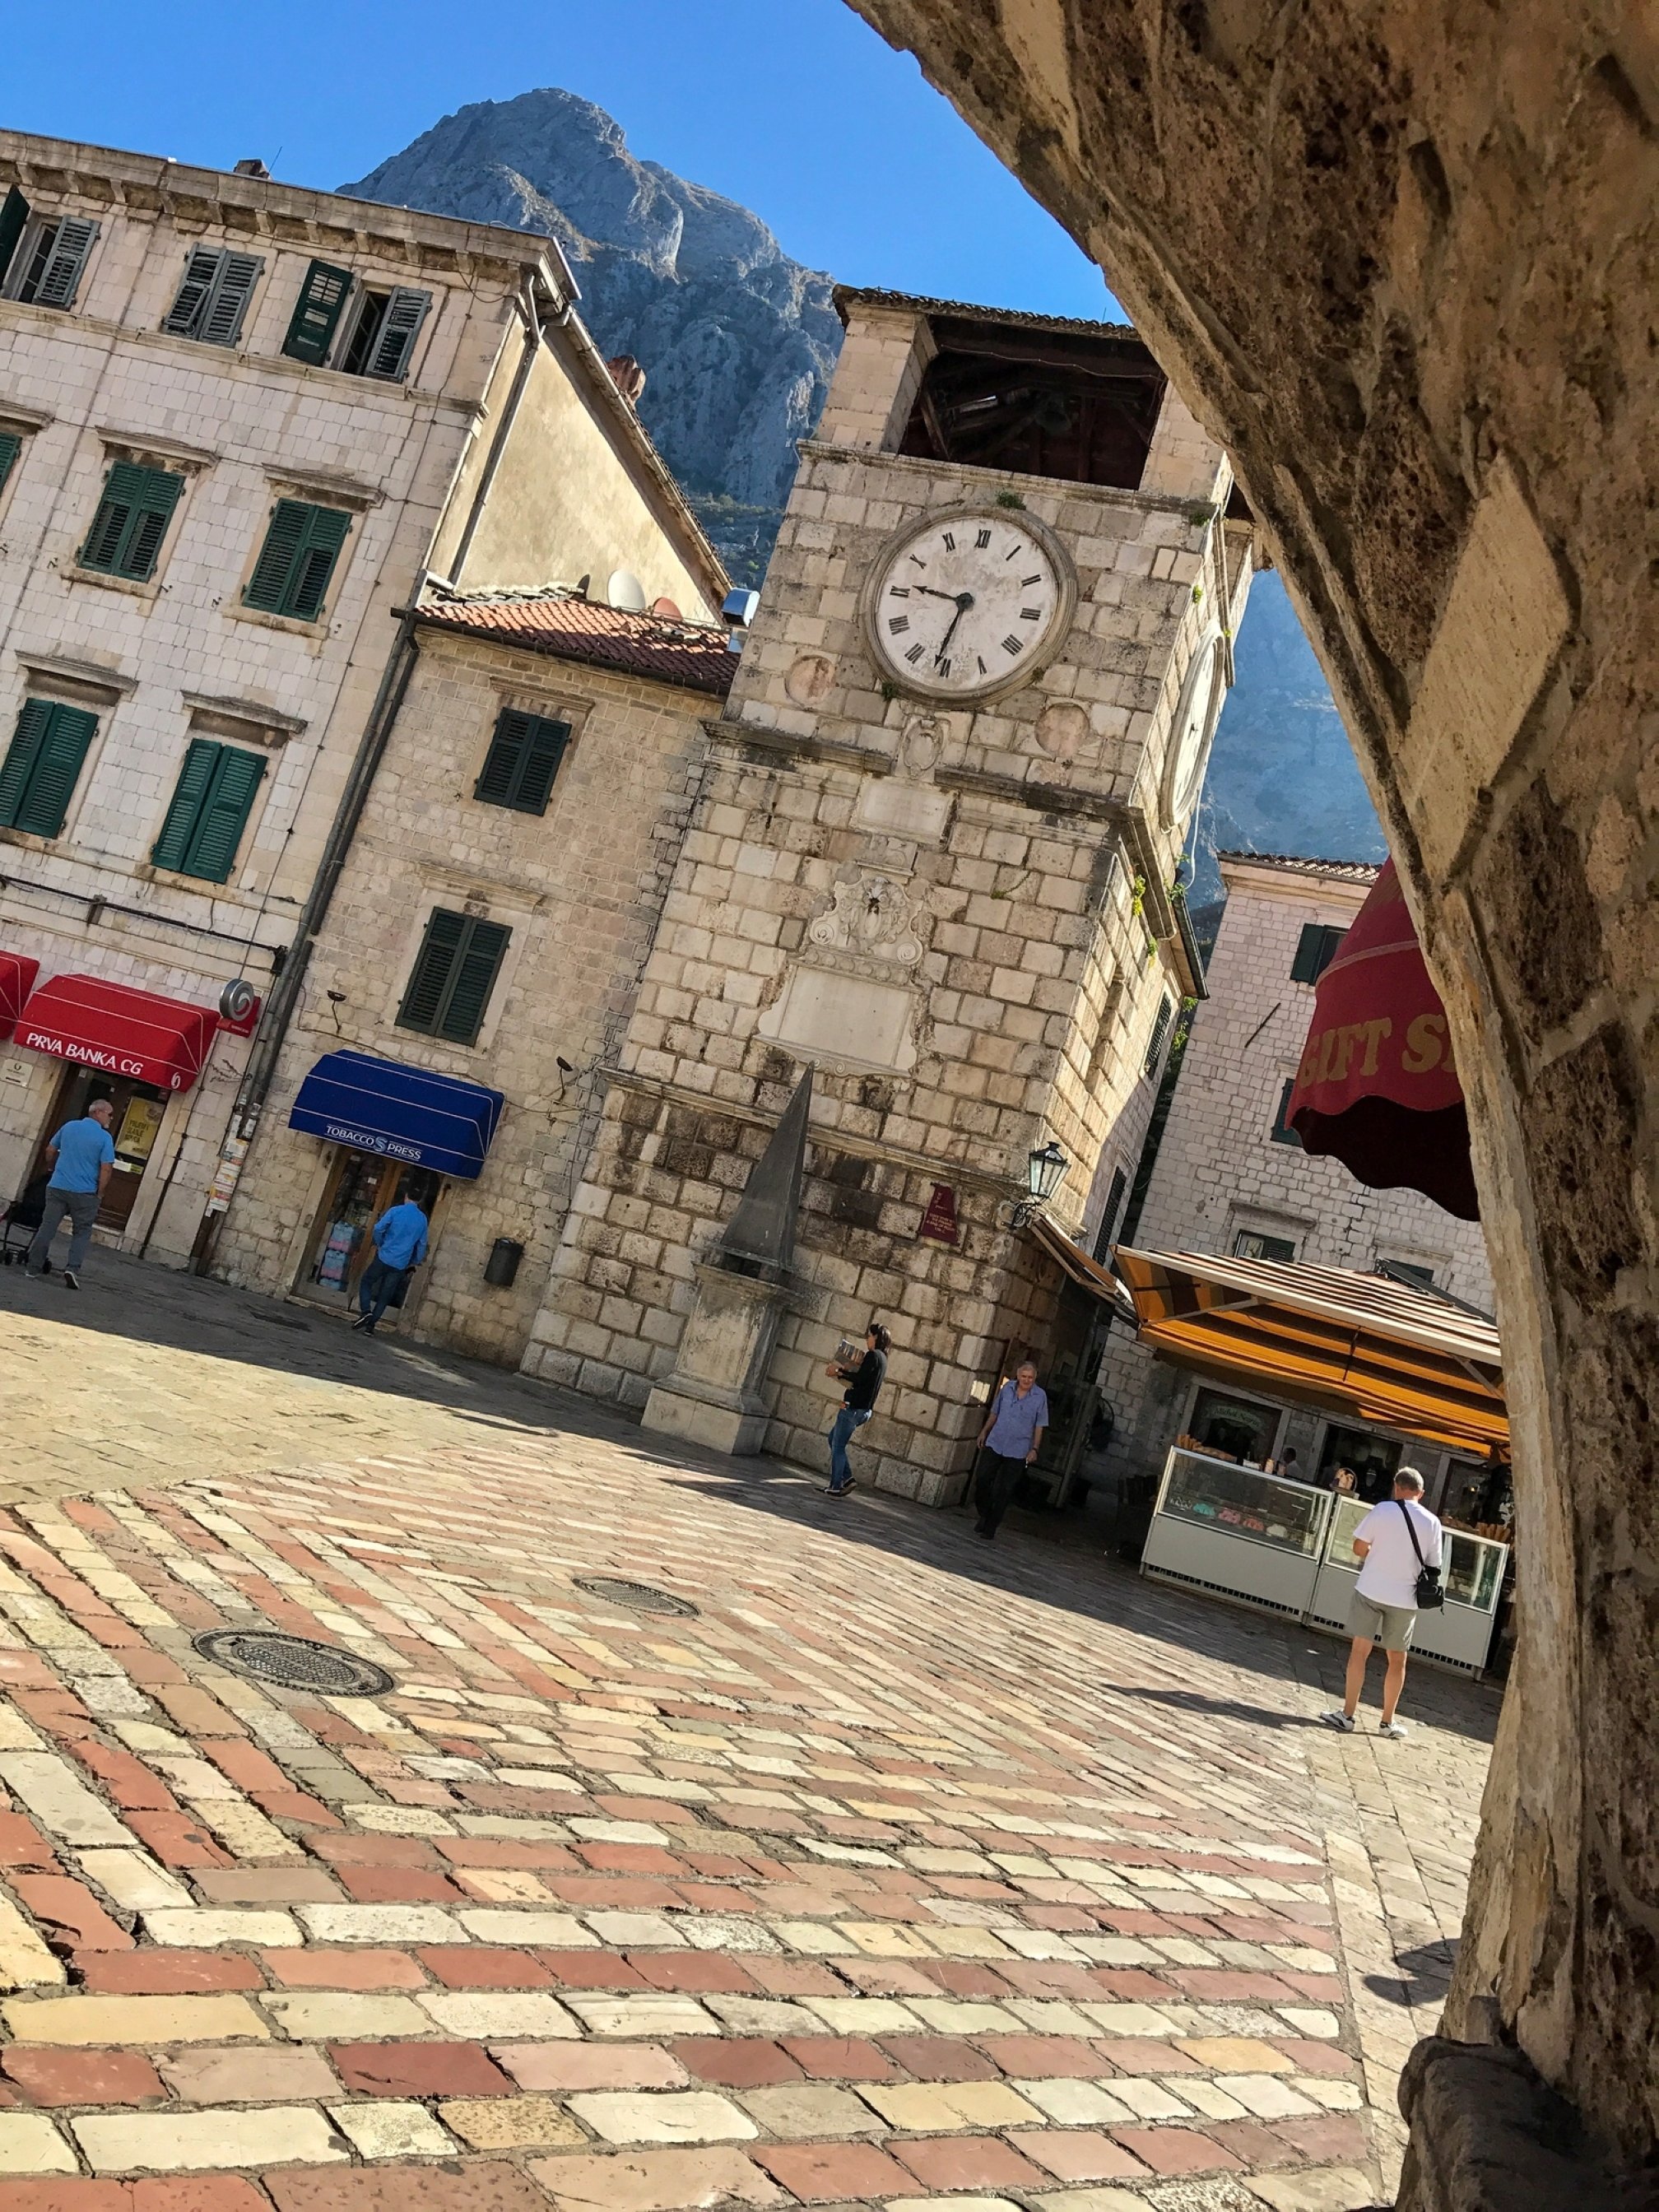 The clock tower in the city of Kotor, Montenegro. (Photo by Özge Şengelen)